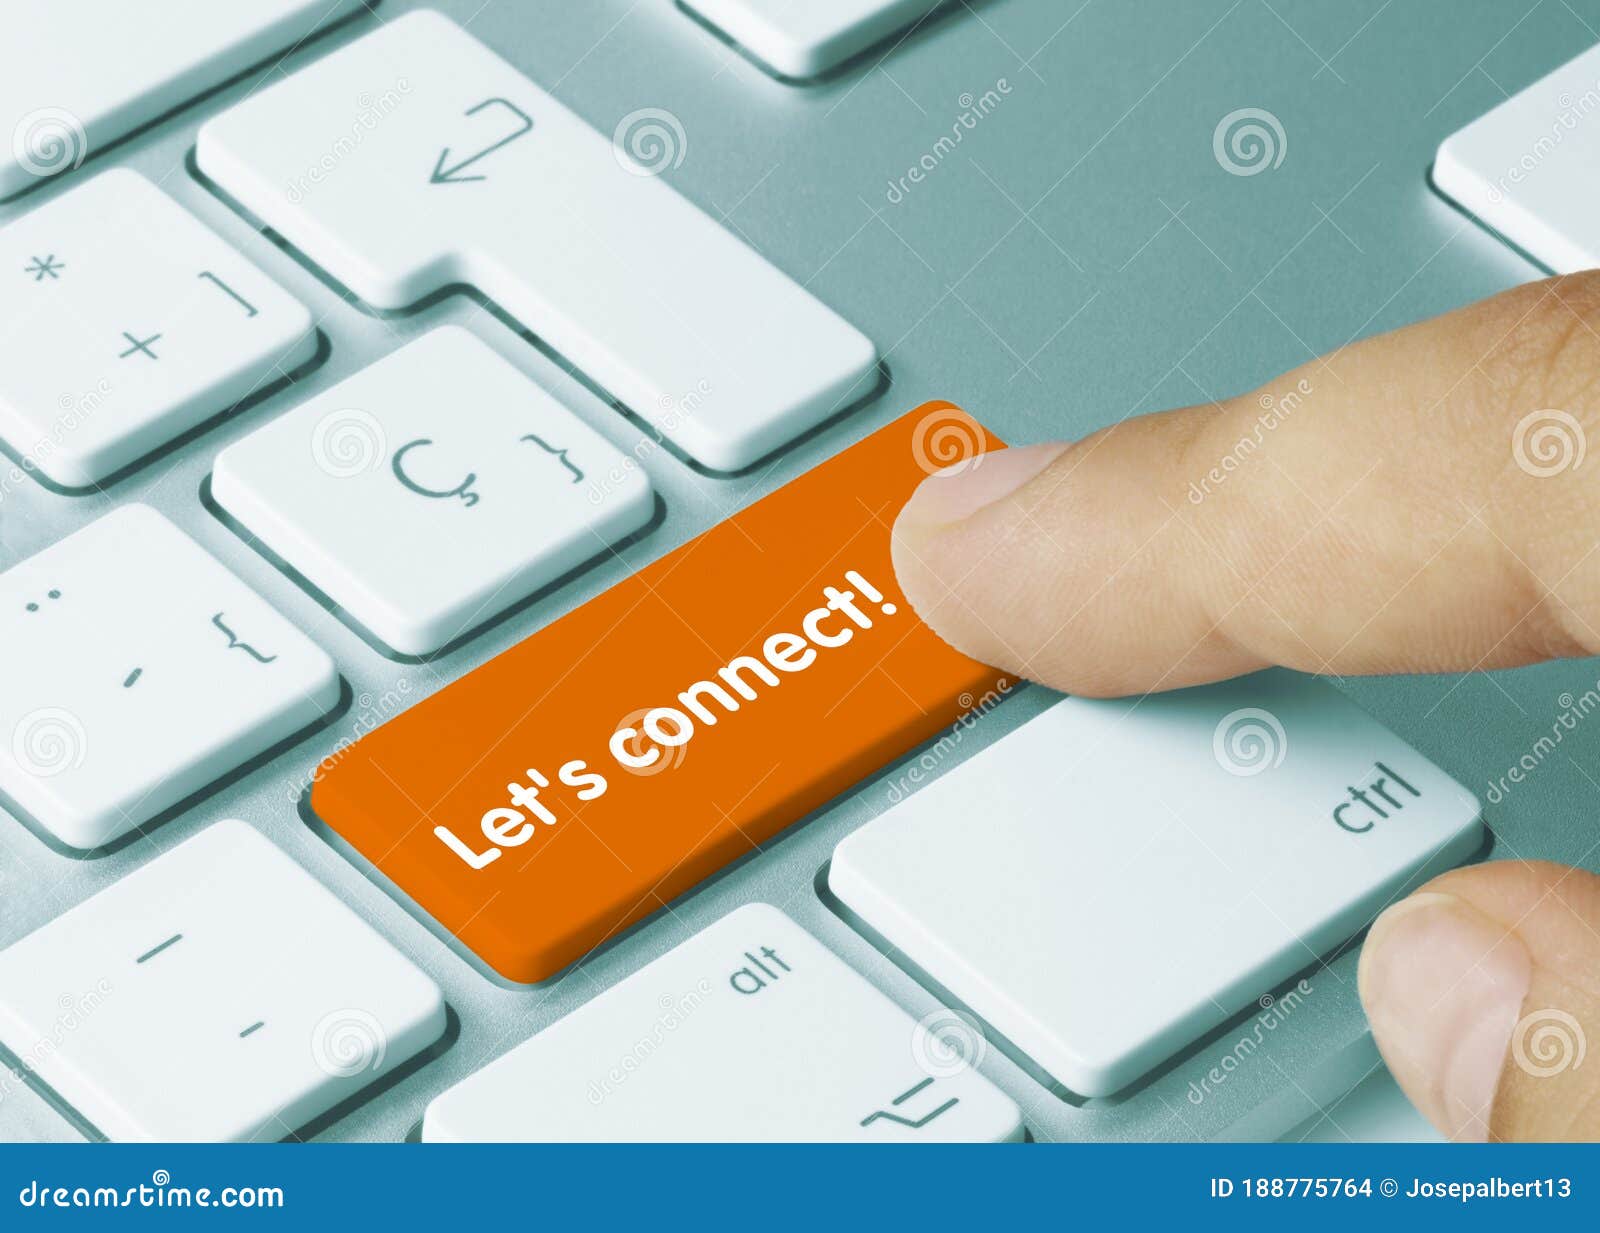 let`s connect! - inscription on orange keyboard key